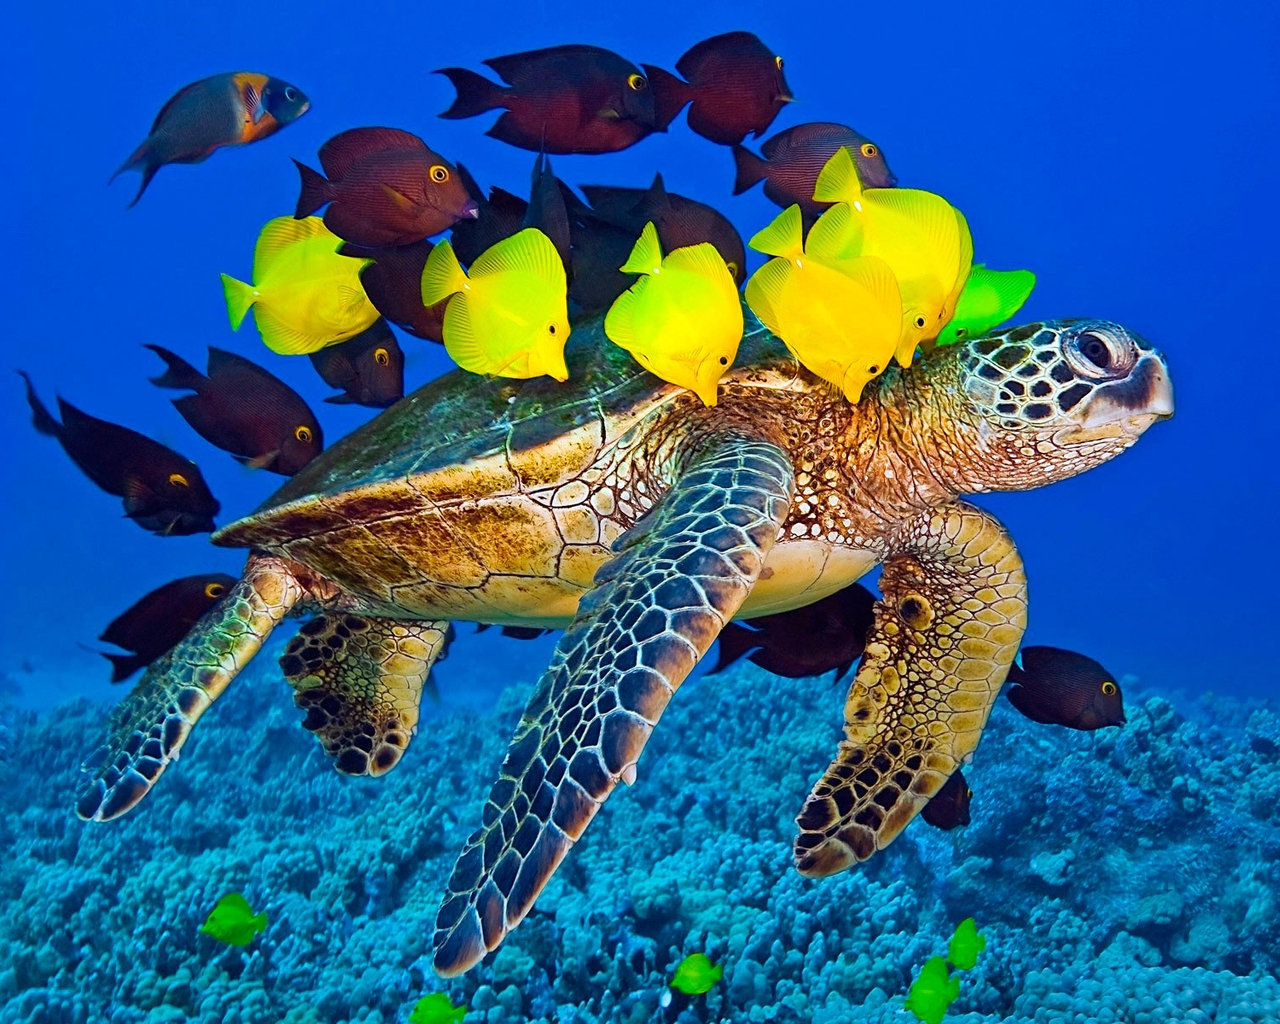 Картинка: Зелёная морская черепаха, рыбы, хирург, зебрасомы, кораллы